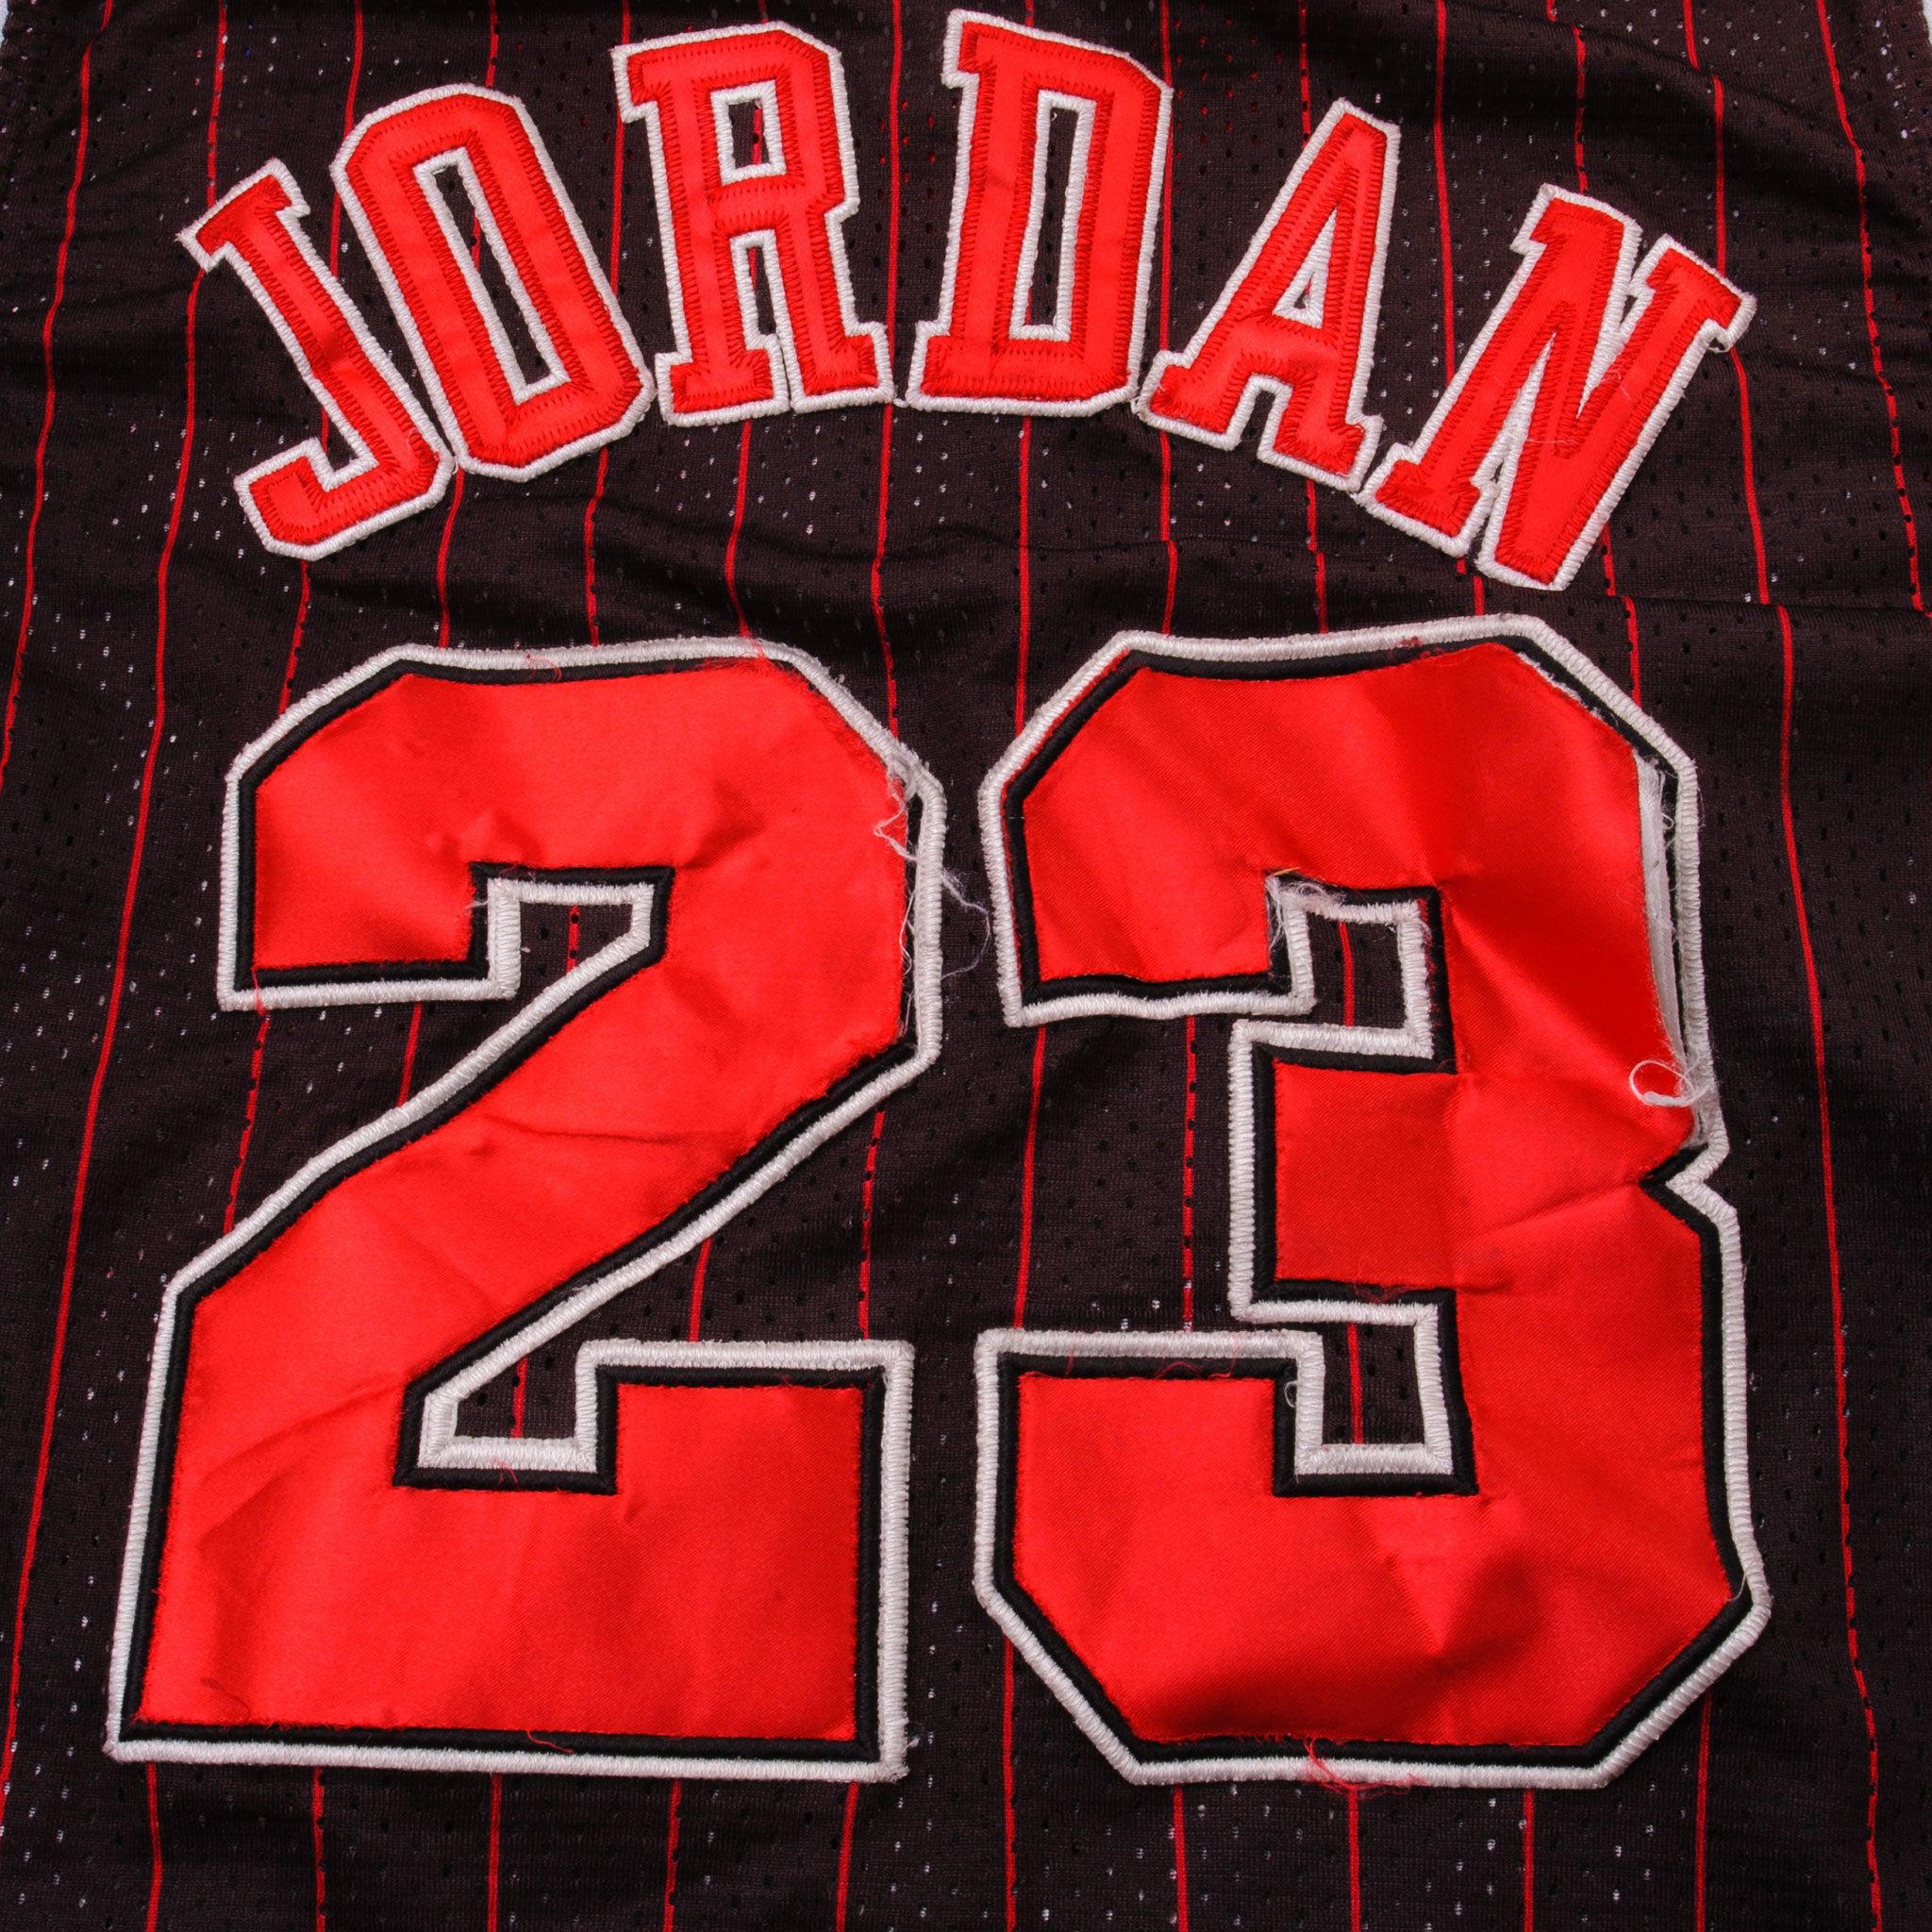 Michael Jordan Jersey Chicago Bulls NBA Basketball Vest Retro S/M/L/XL/XXL